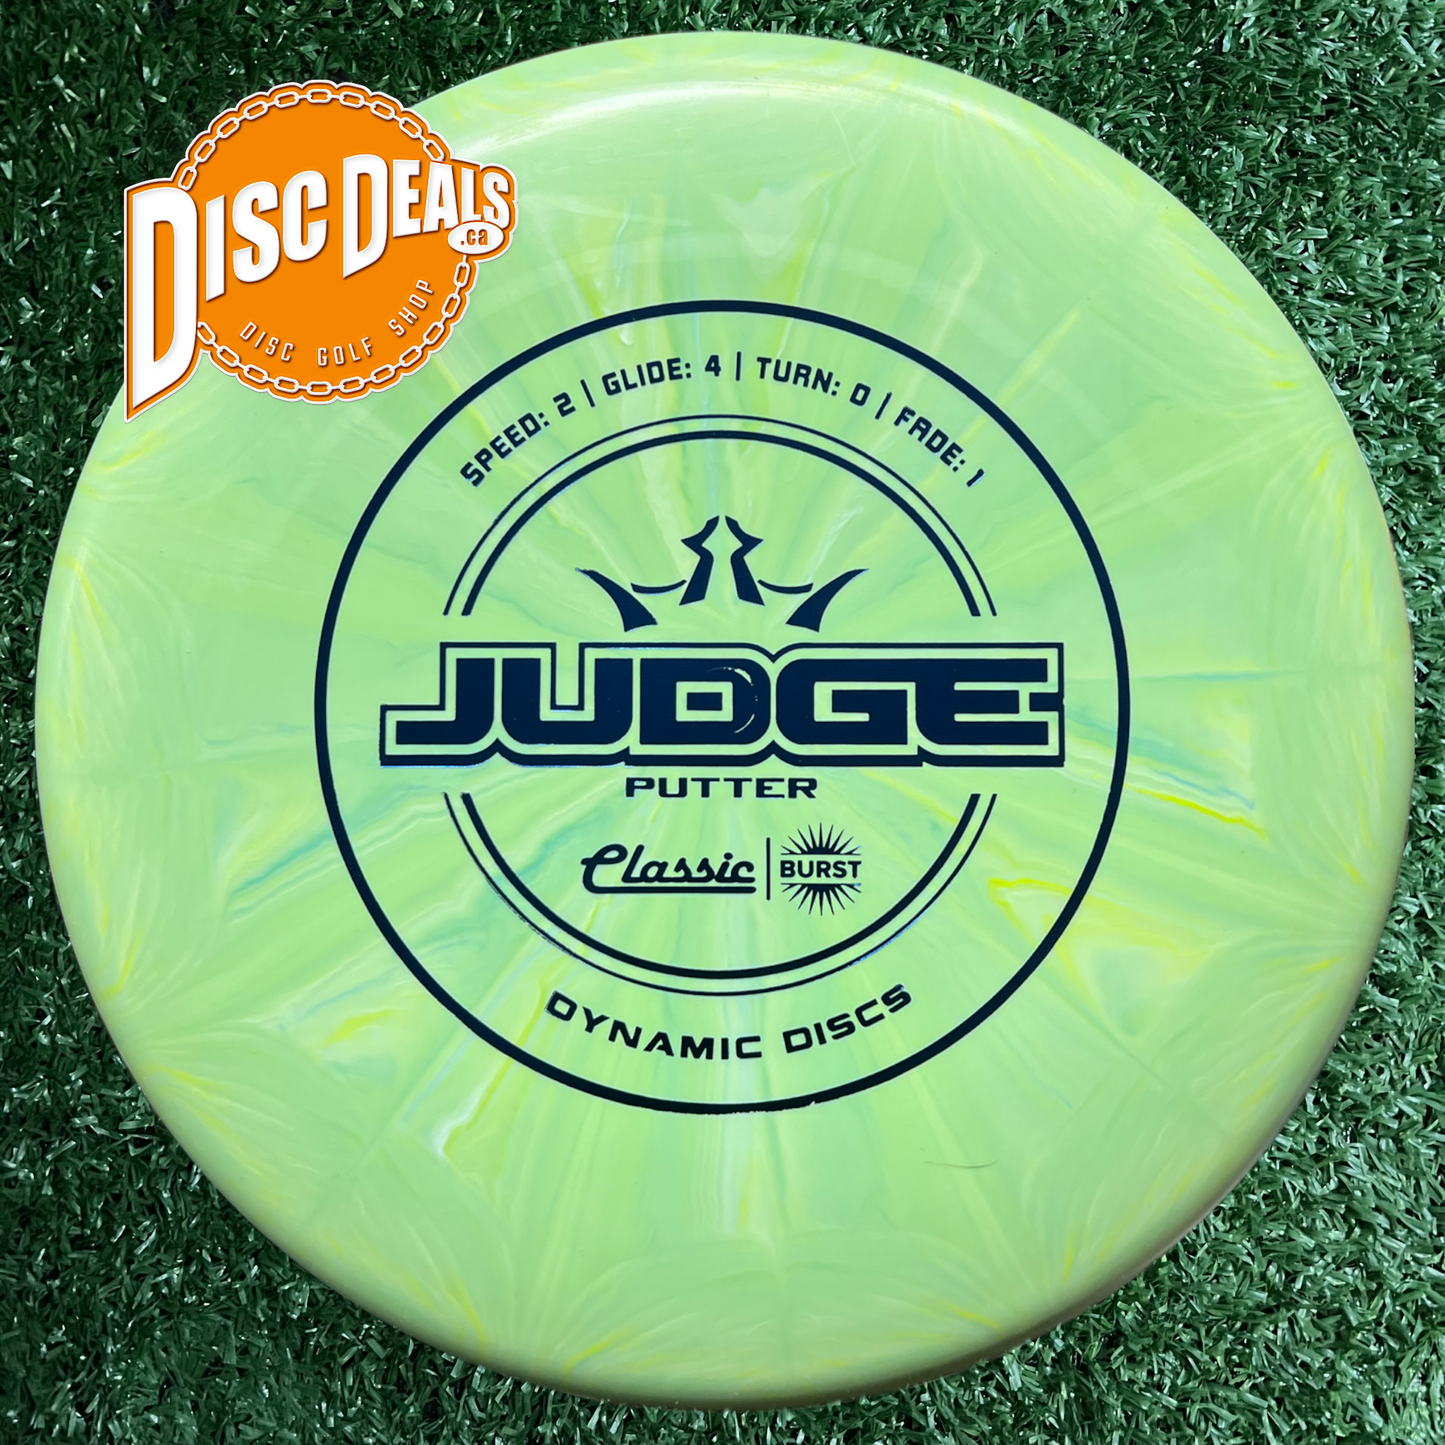 Dynamic Discs Judge - Classic - Classic Burst